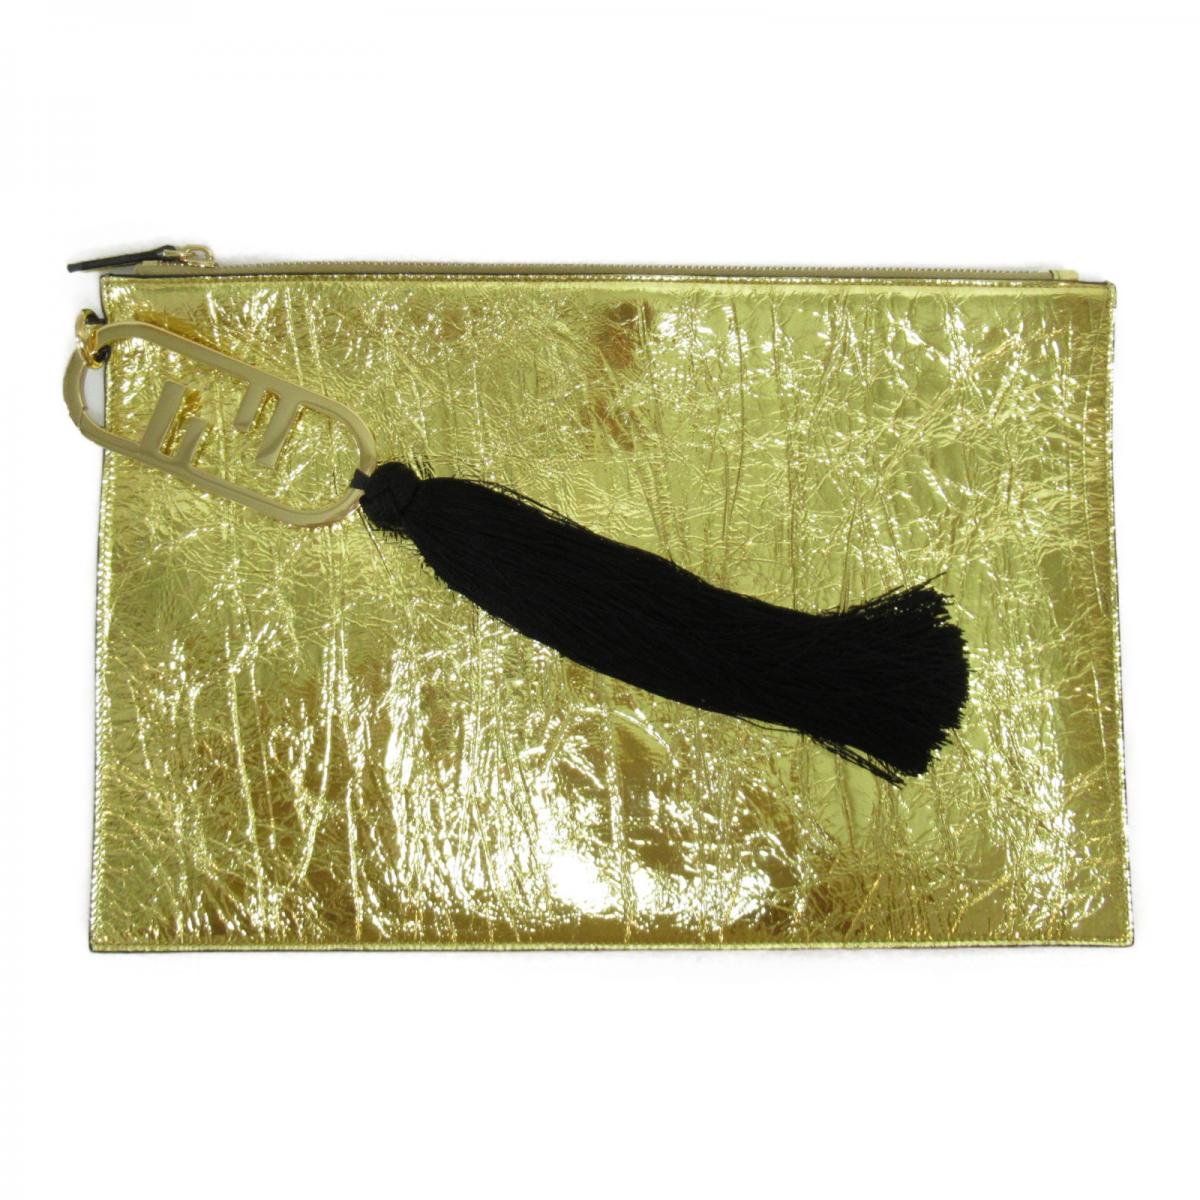 Metallic Leather Tassel Clutch Bag 8N0178AISP